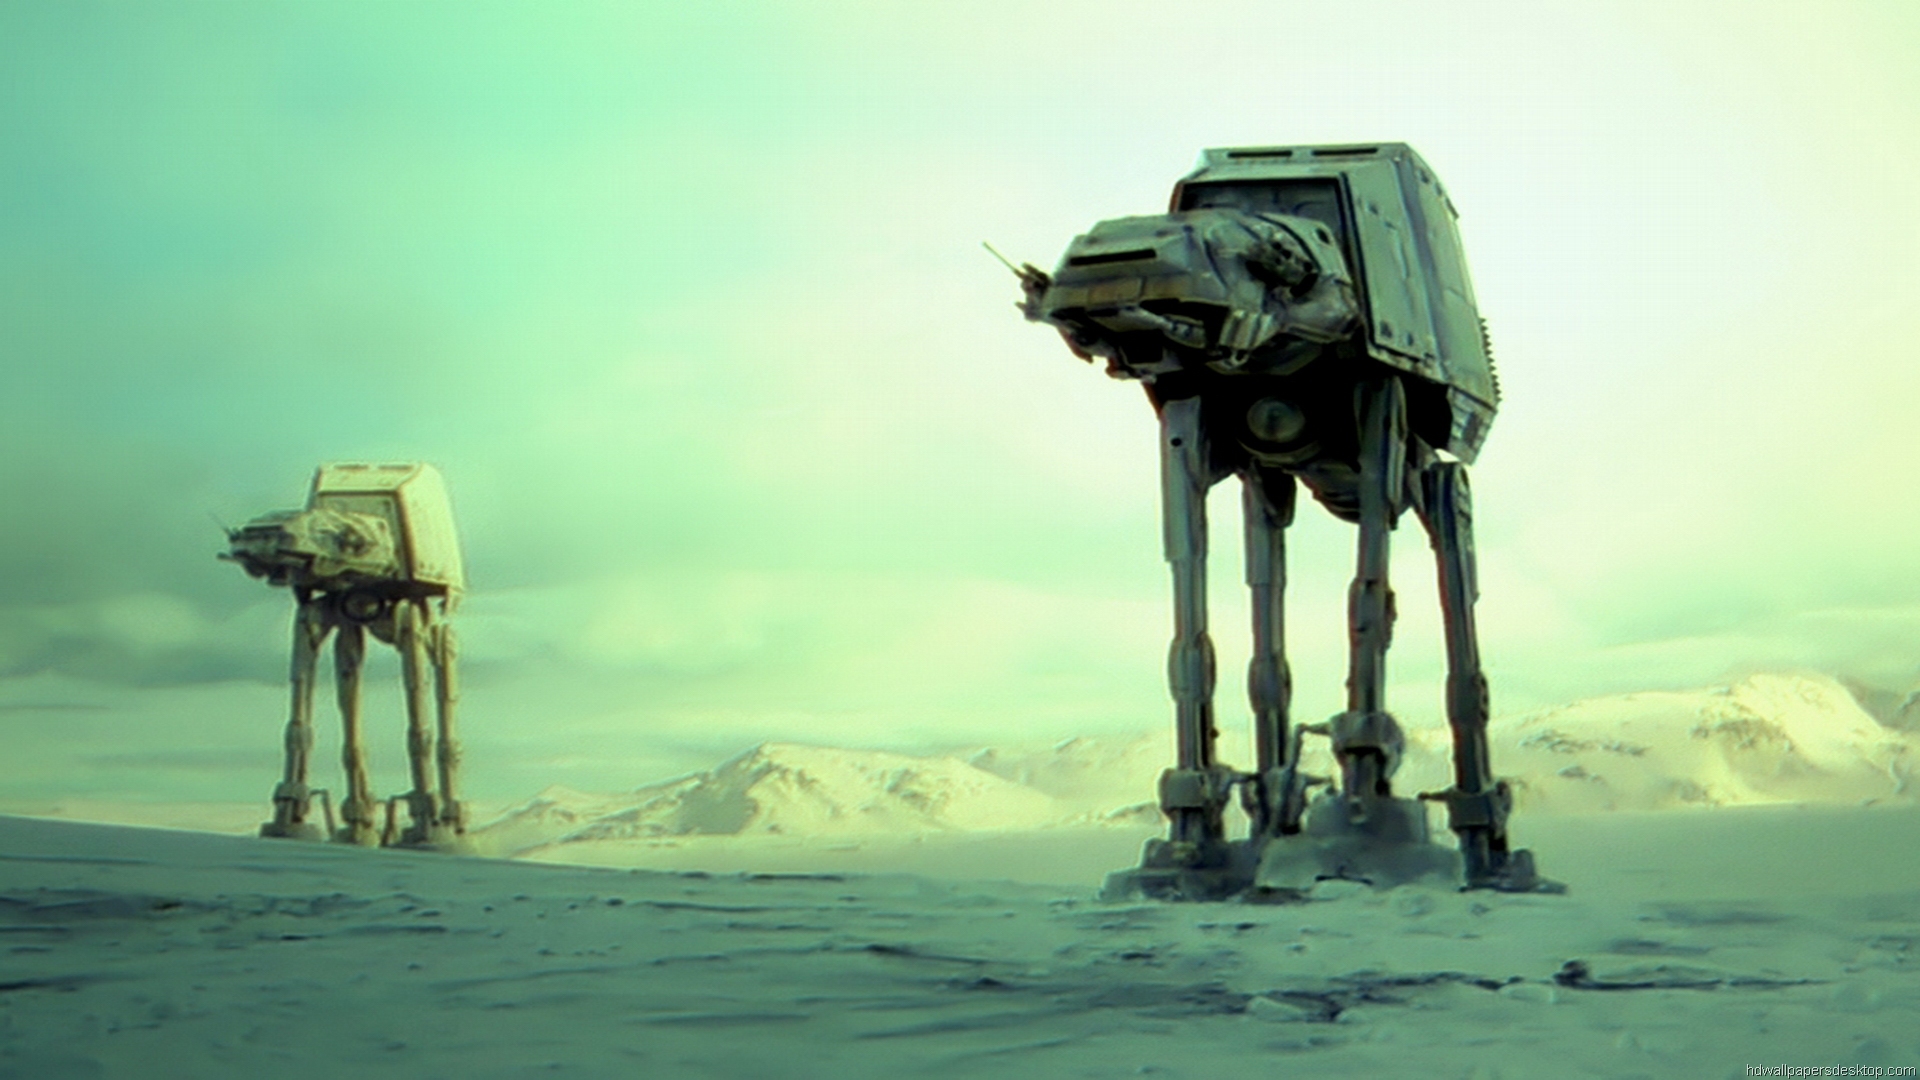 Star Wars Full HD Wallpaper 1080p Desktop starwars v imperial